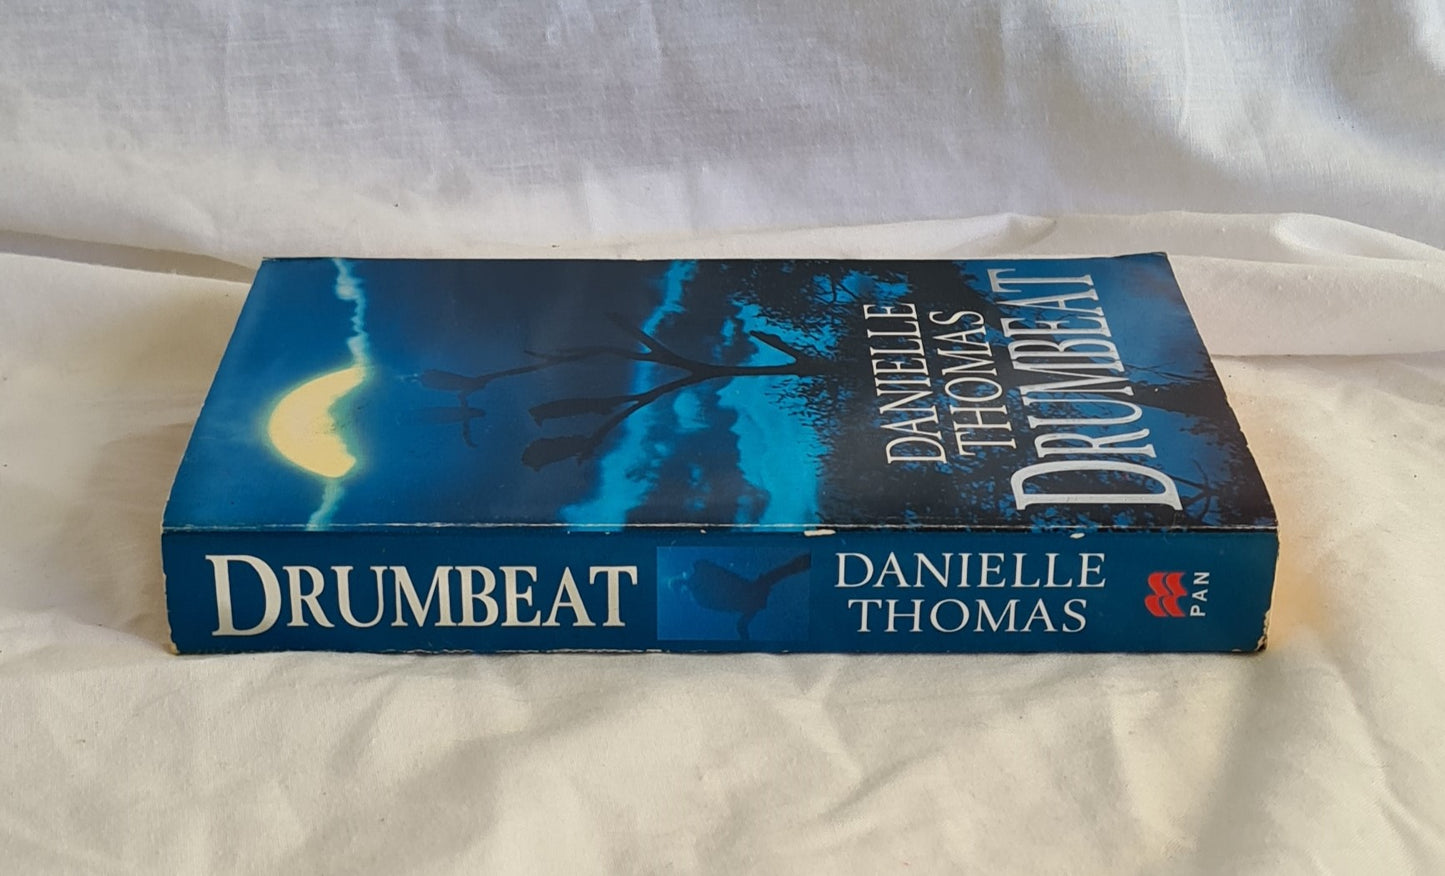 Drumbeat by Danielle Thomas